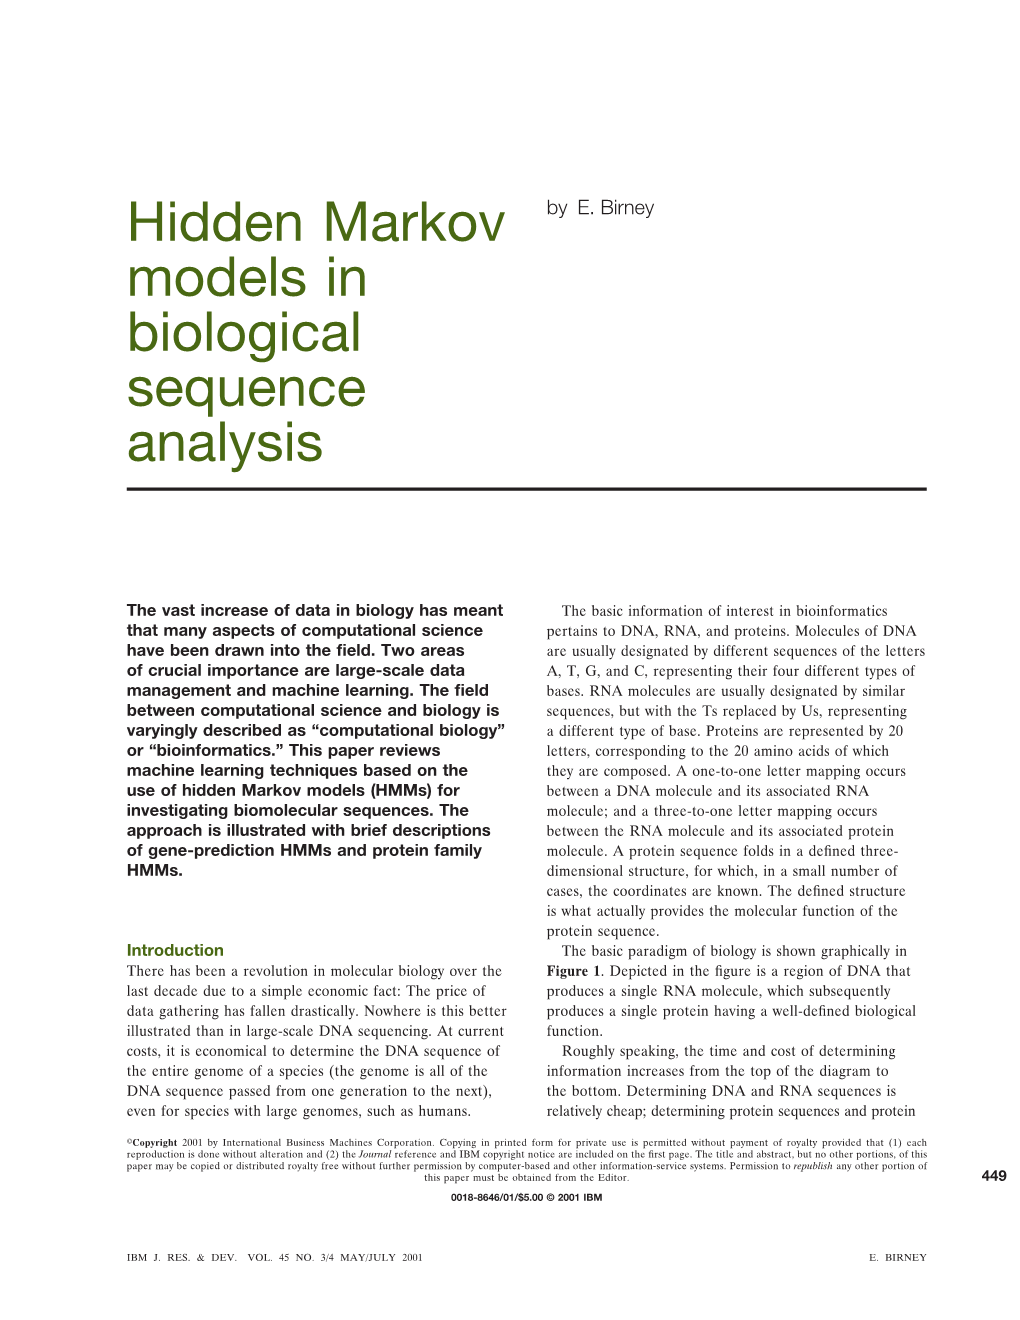 Hidden Markov Models in Biological Sequence Analysis